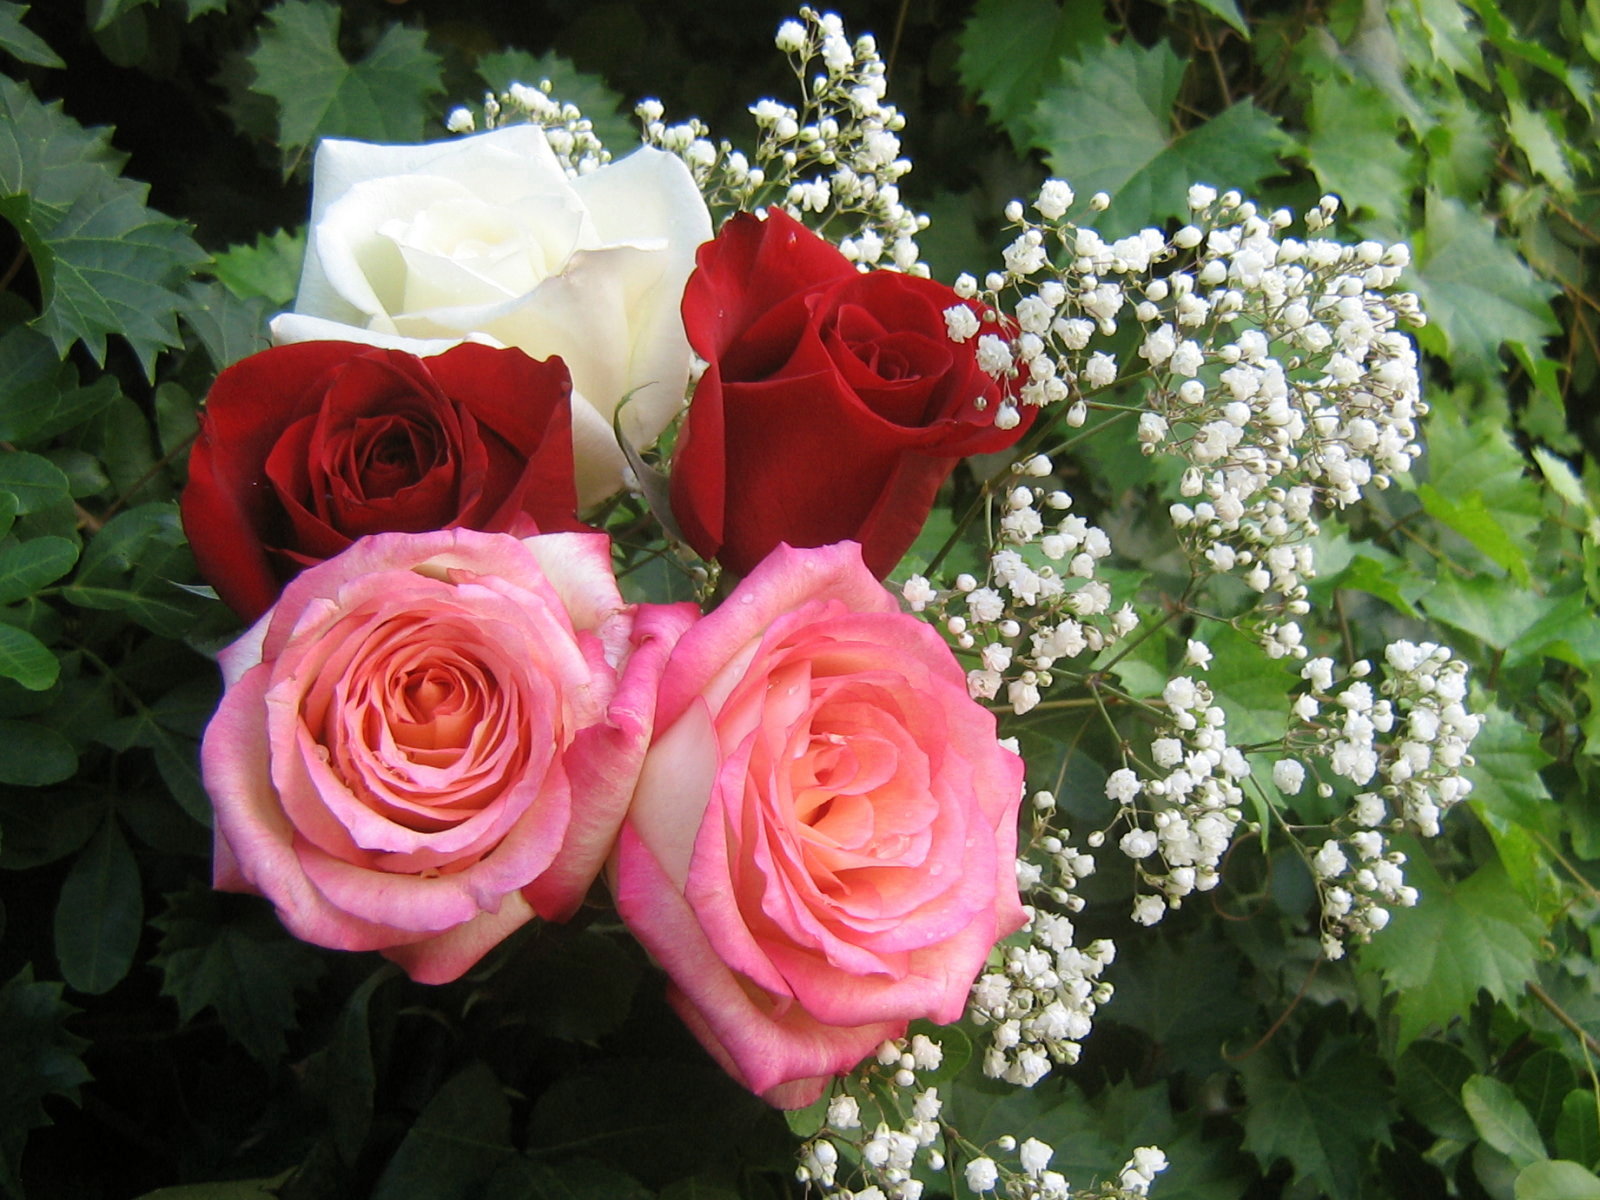 belle immagini di rose per carta da parati,fiore,pianta fiorita,rose da giardino,rosa,pianta